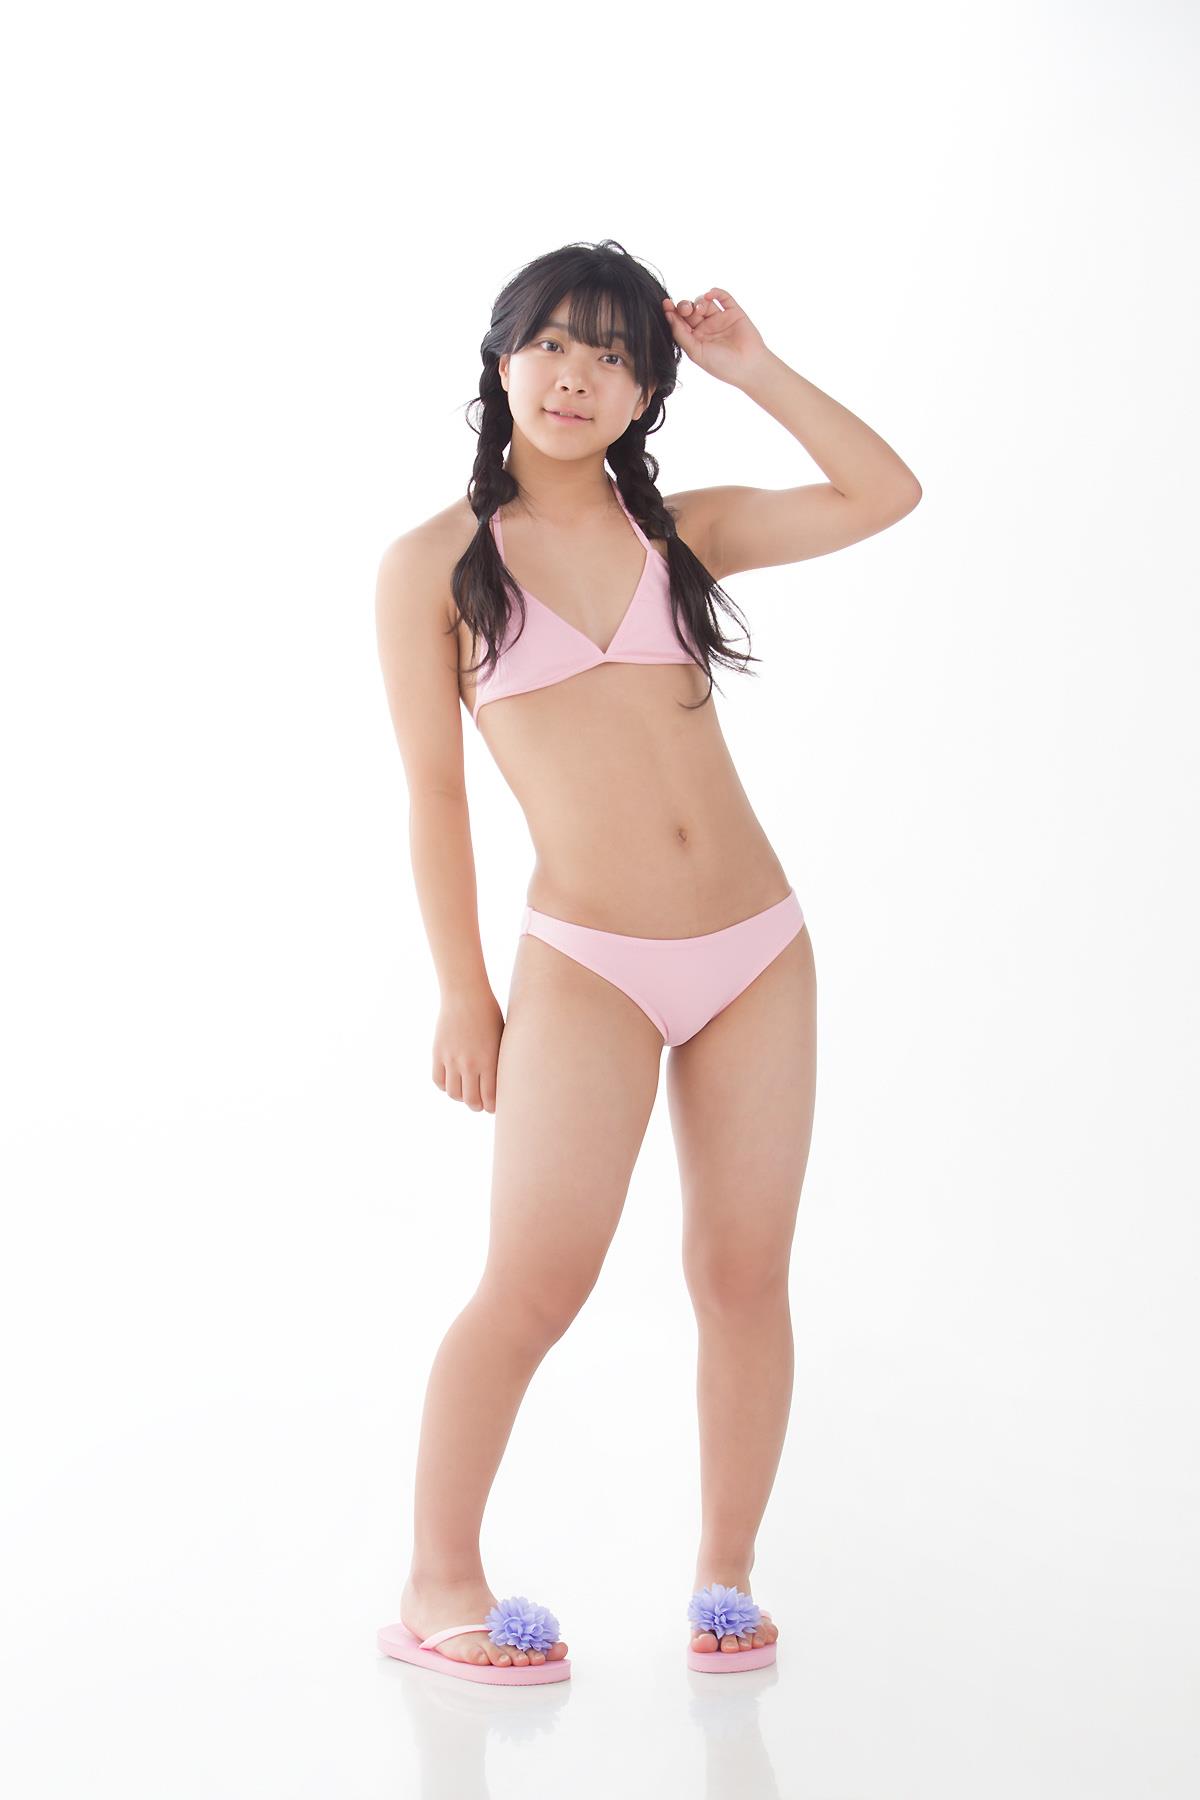 Minisuka.tv Saria Natsume 夏目咲莉愛 - Premium Gallery 2.4 - 9.jpg